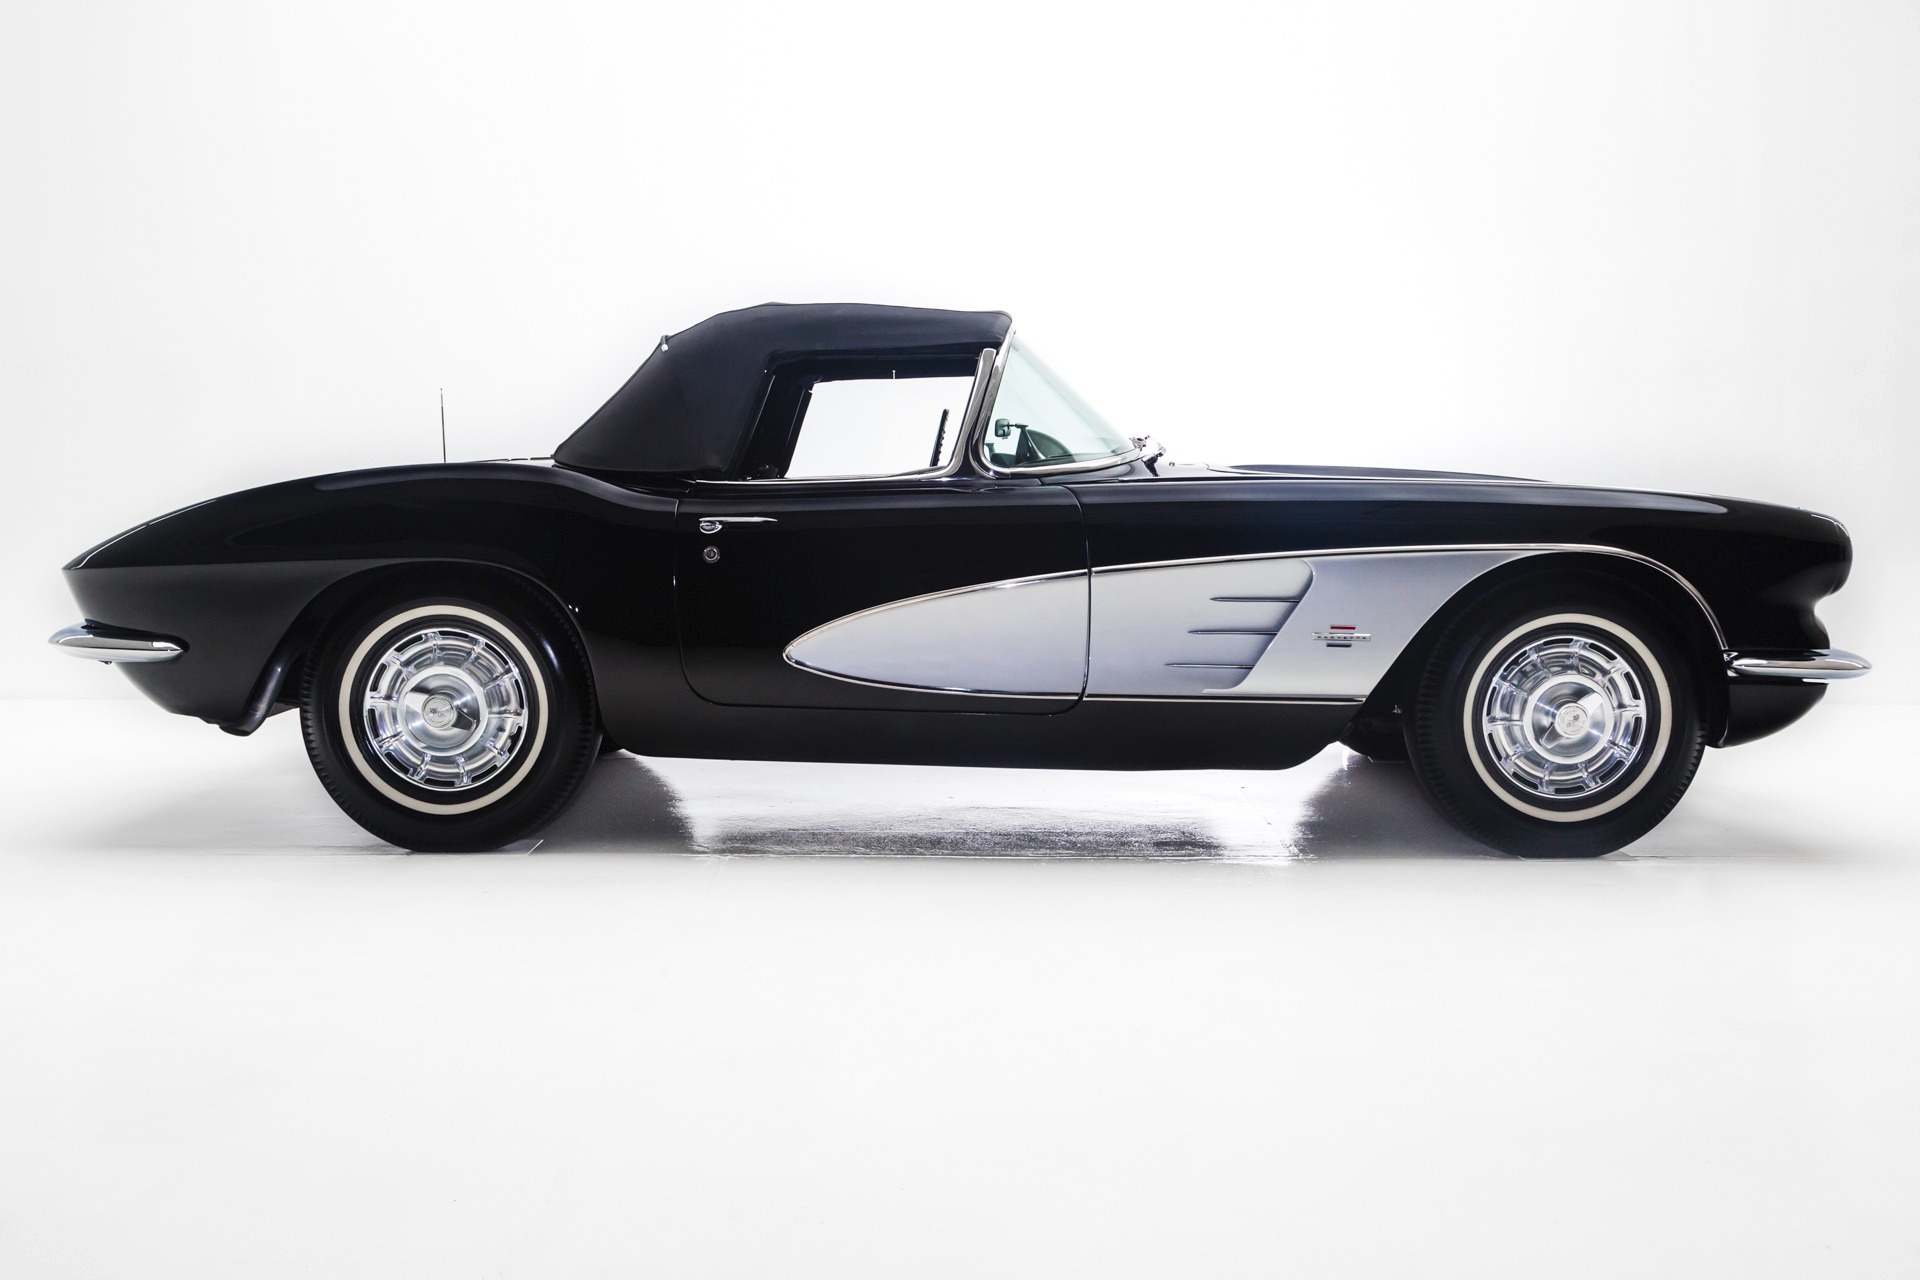 For Sale Used 1961 Chevrolet Corvette Triple Black 4-Spd A/C | American Dream Machines Des Moines IA 50309